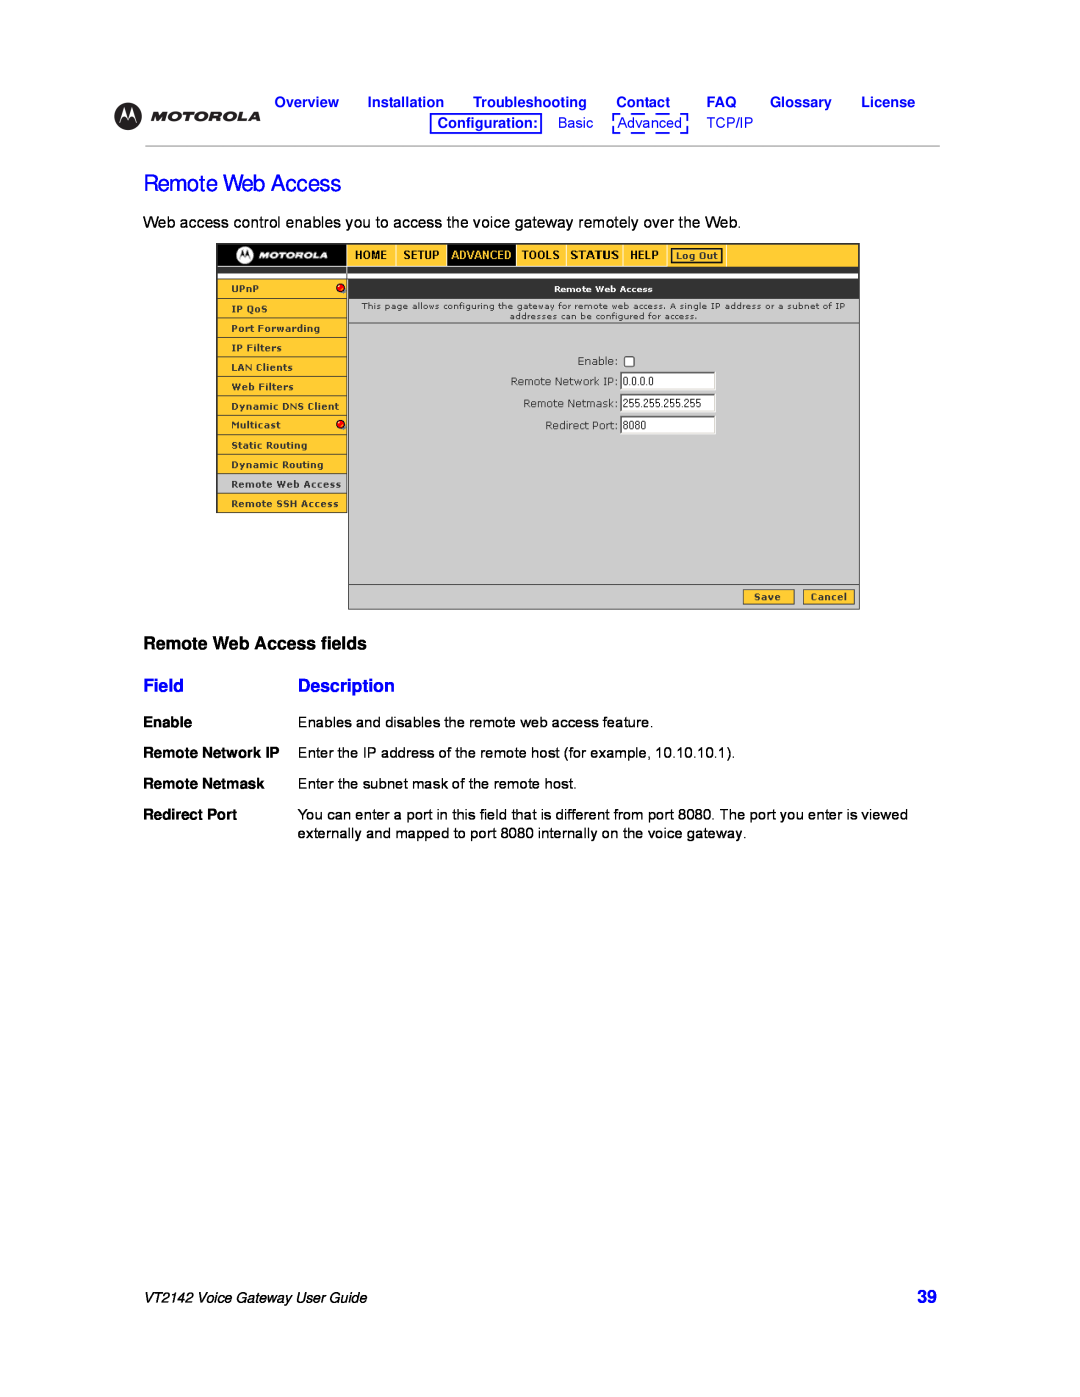 Motorola VT2142 manual Remote Web Access fields, Field, Description, Configuration Basic Advanced TCP/IP 